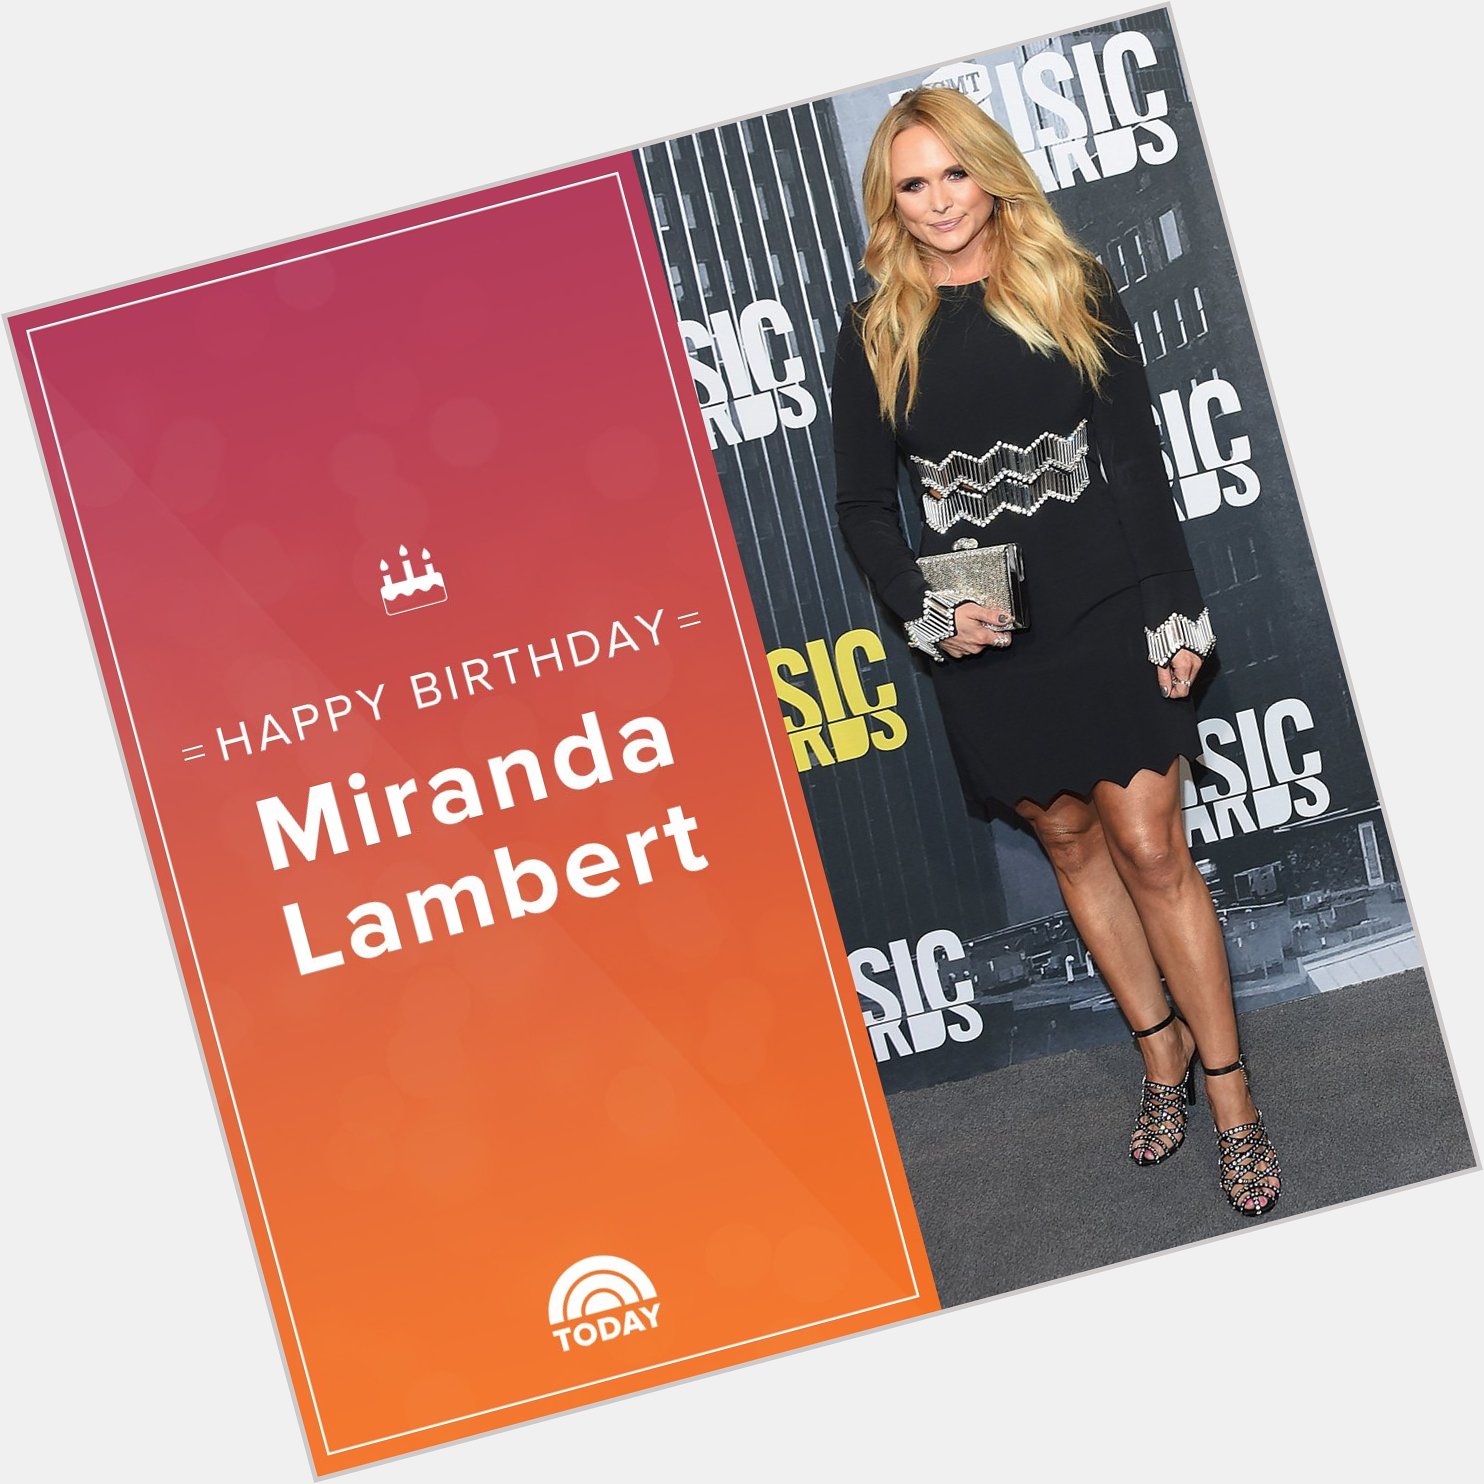 Happy 35th birthday, Miranda Lambert!  